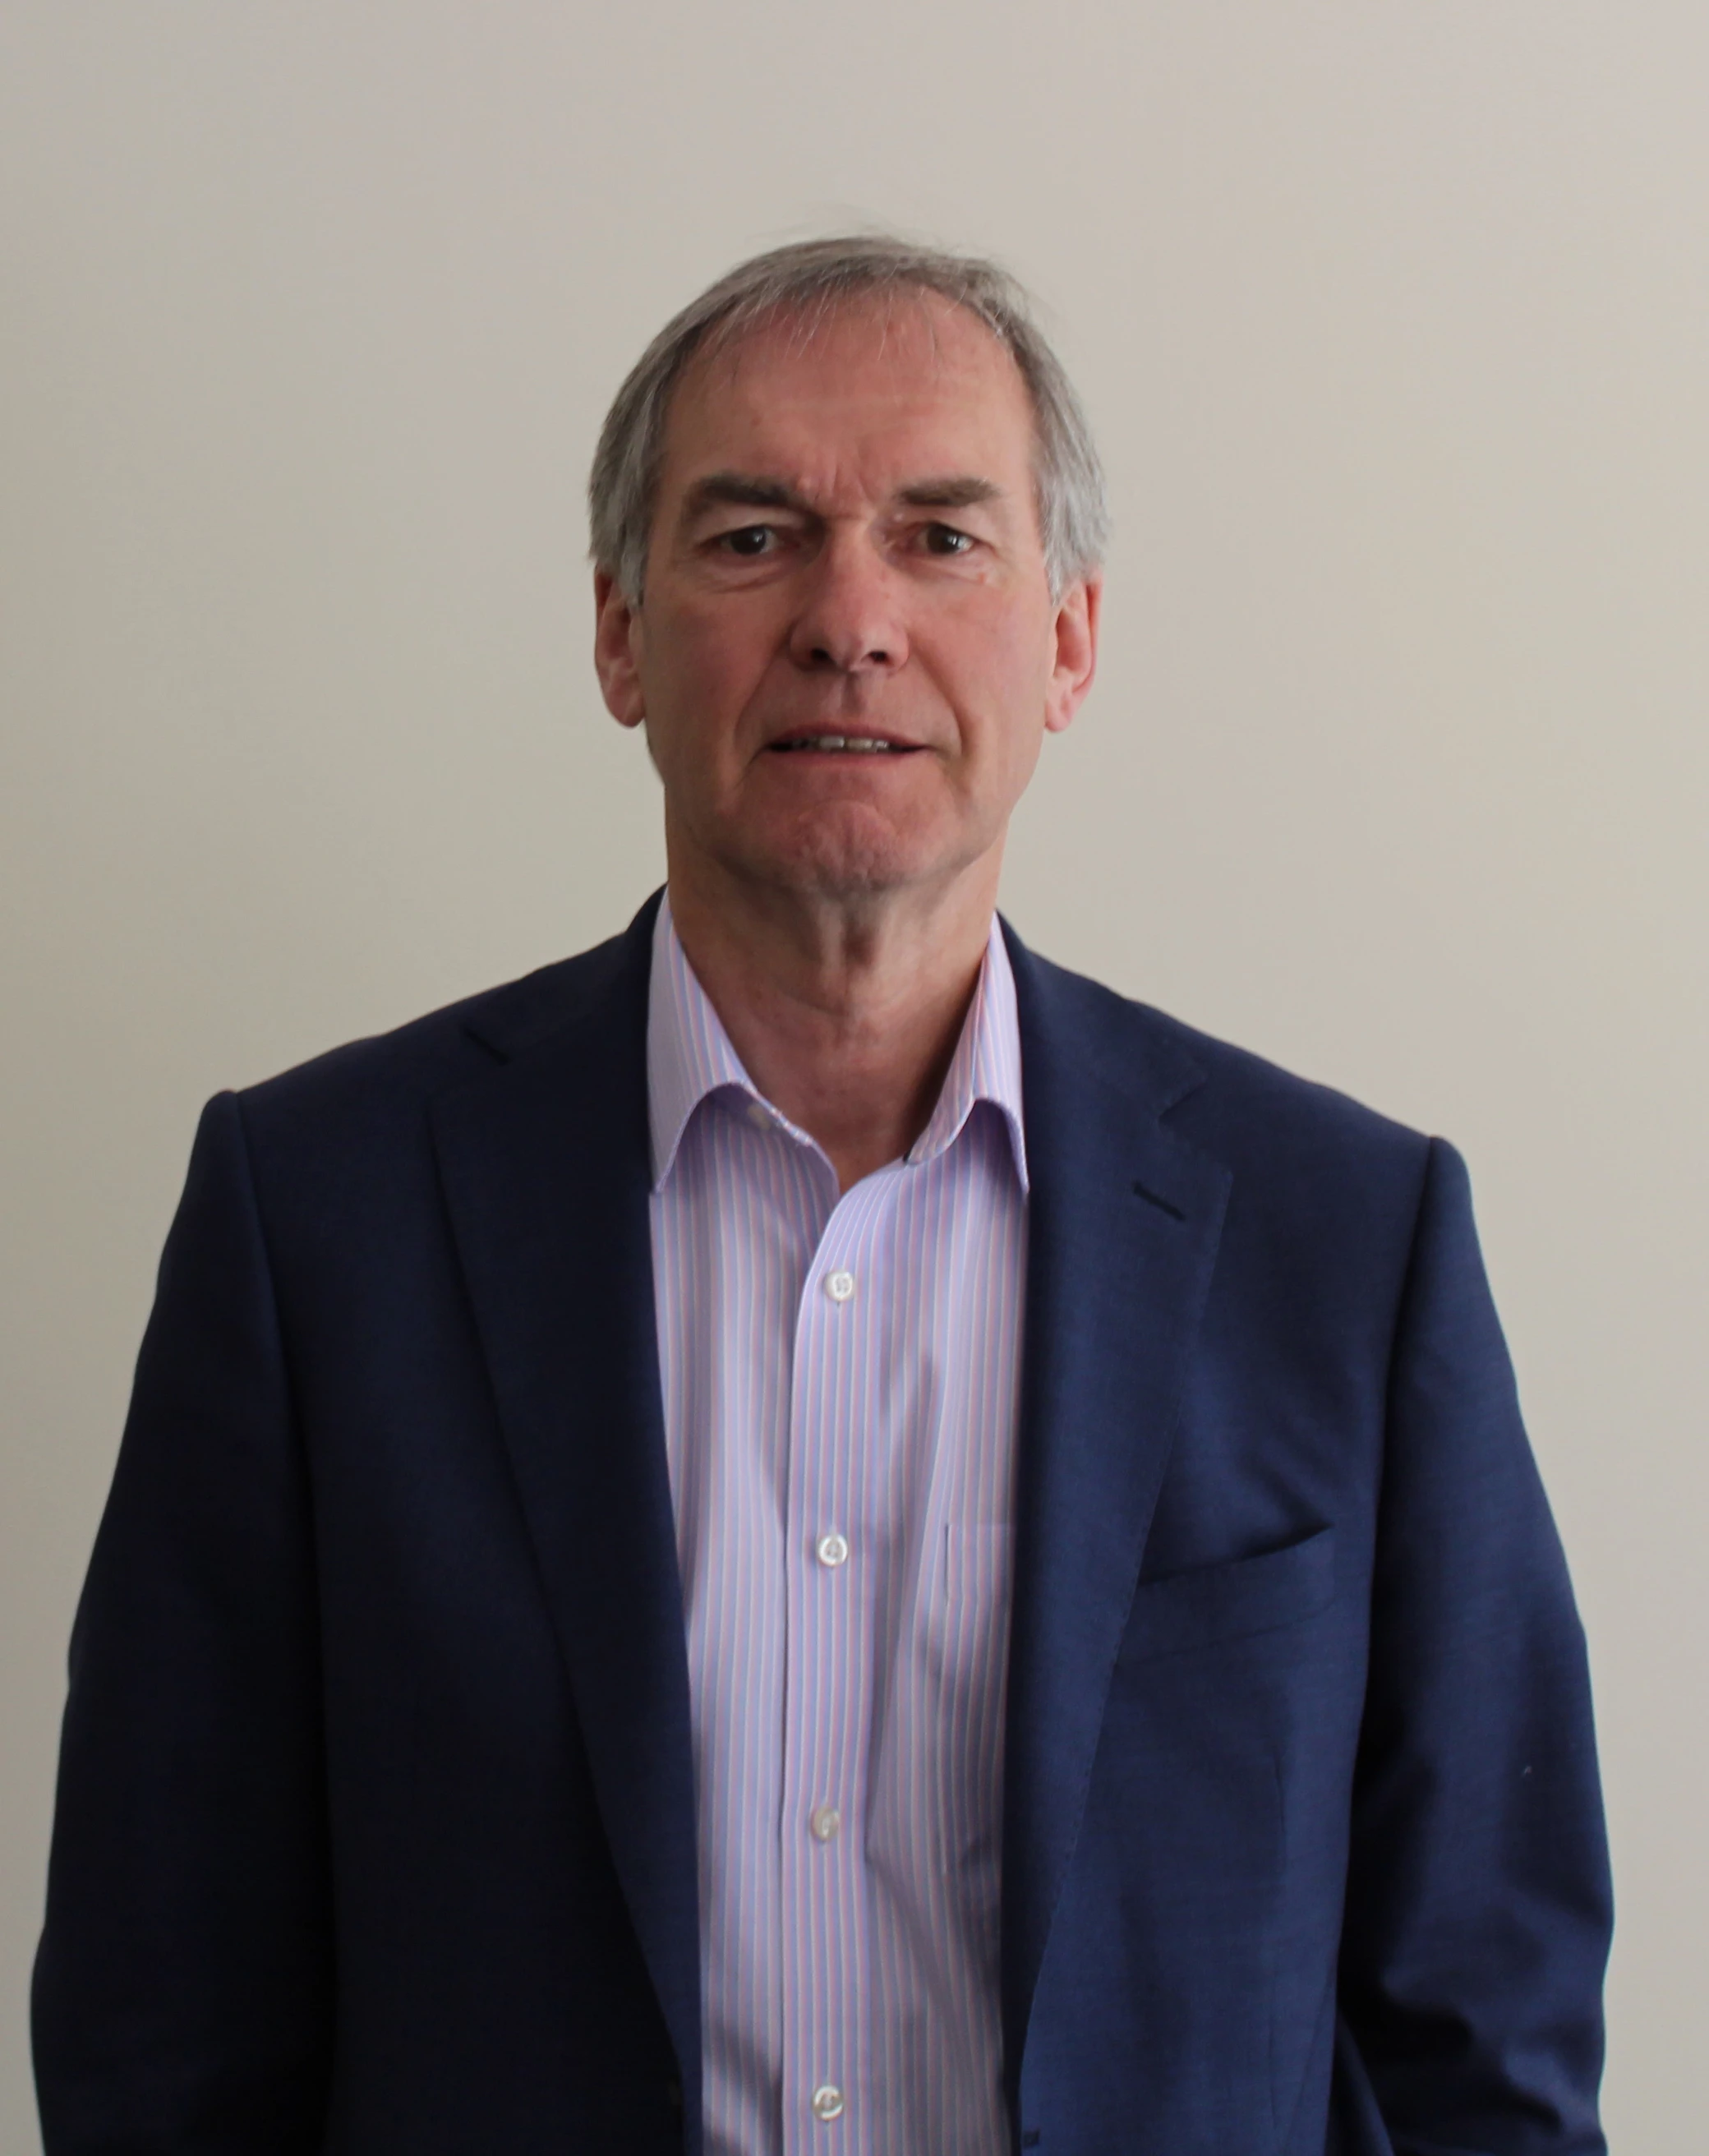 John Randle, Luxonic's new Non-executive Chairman